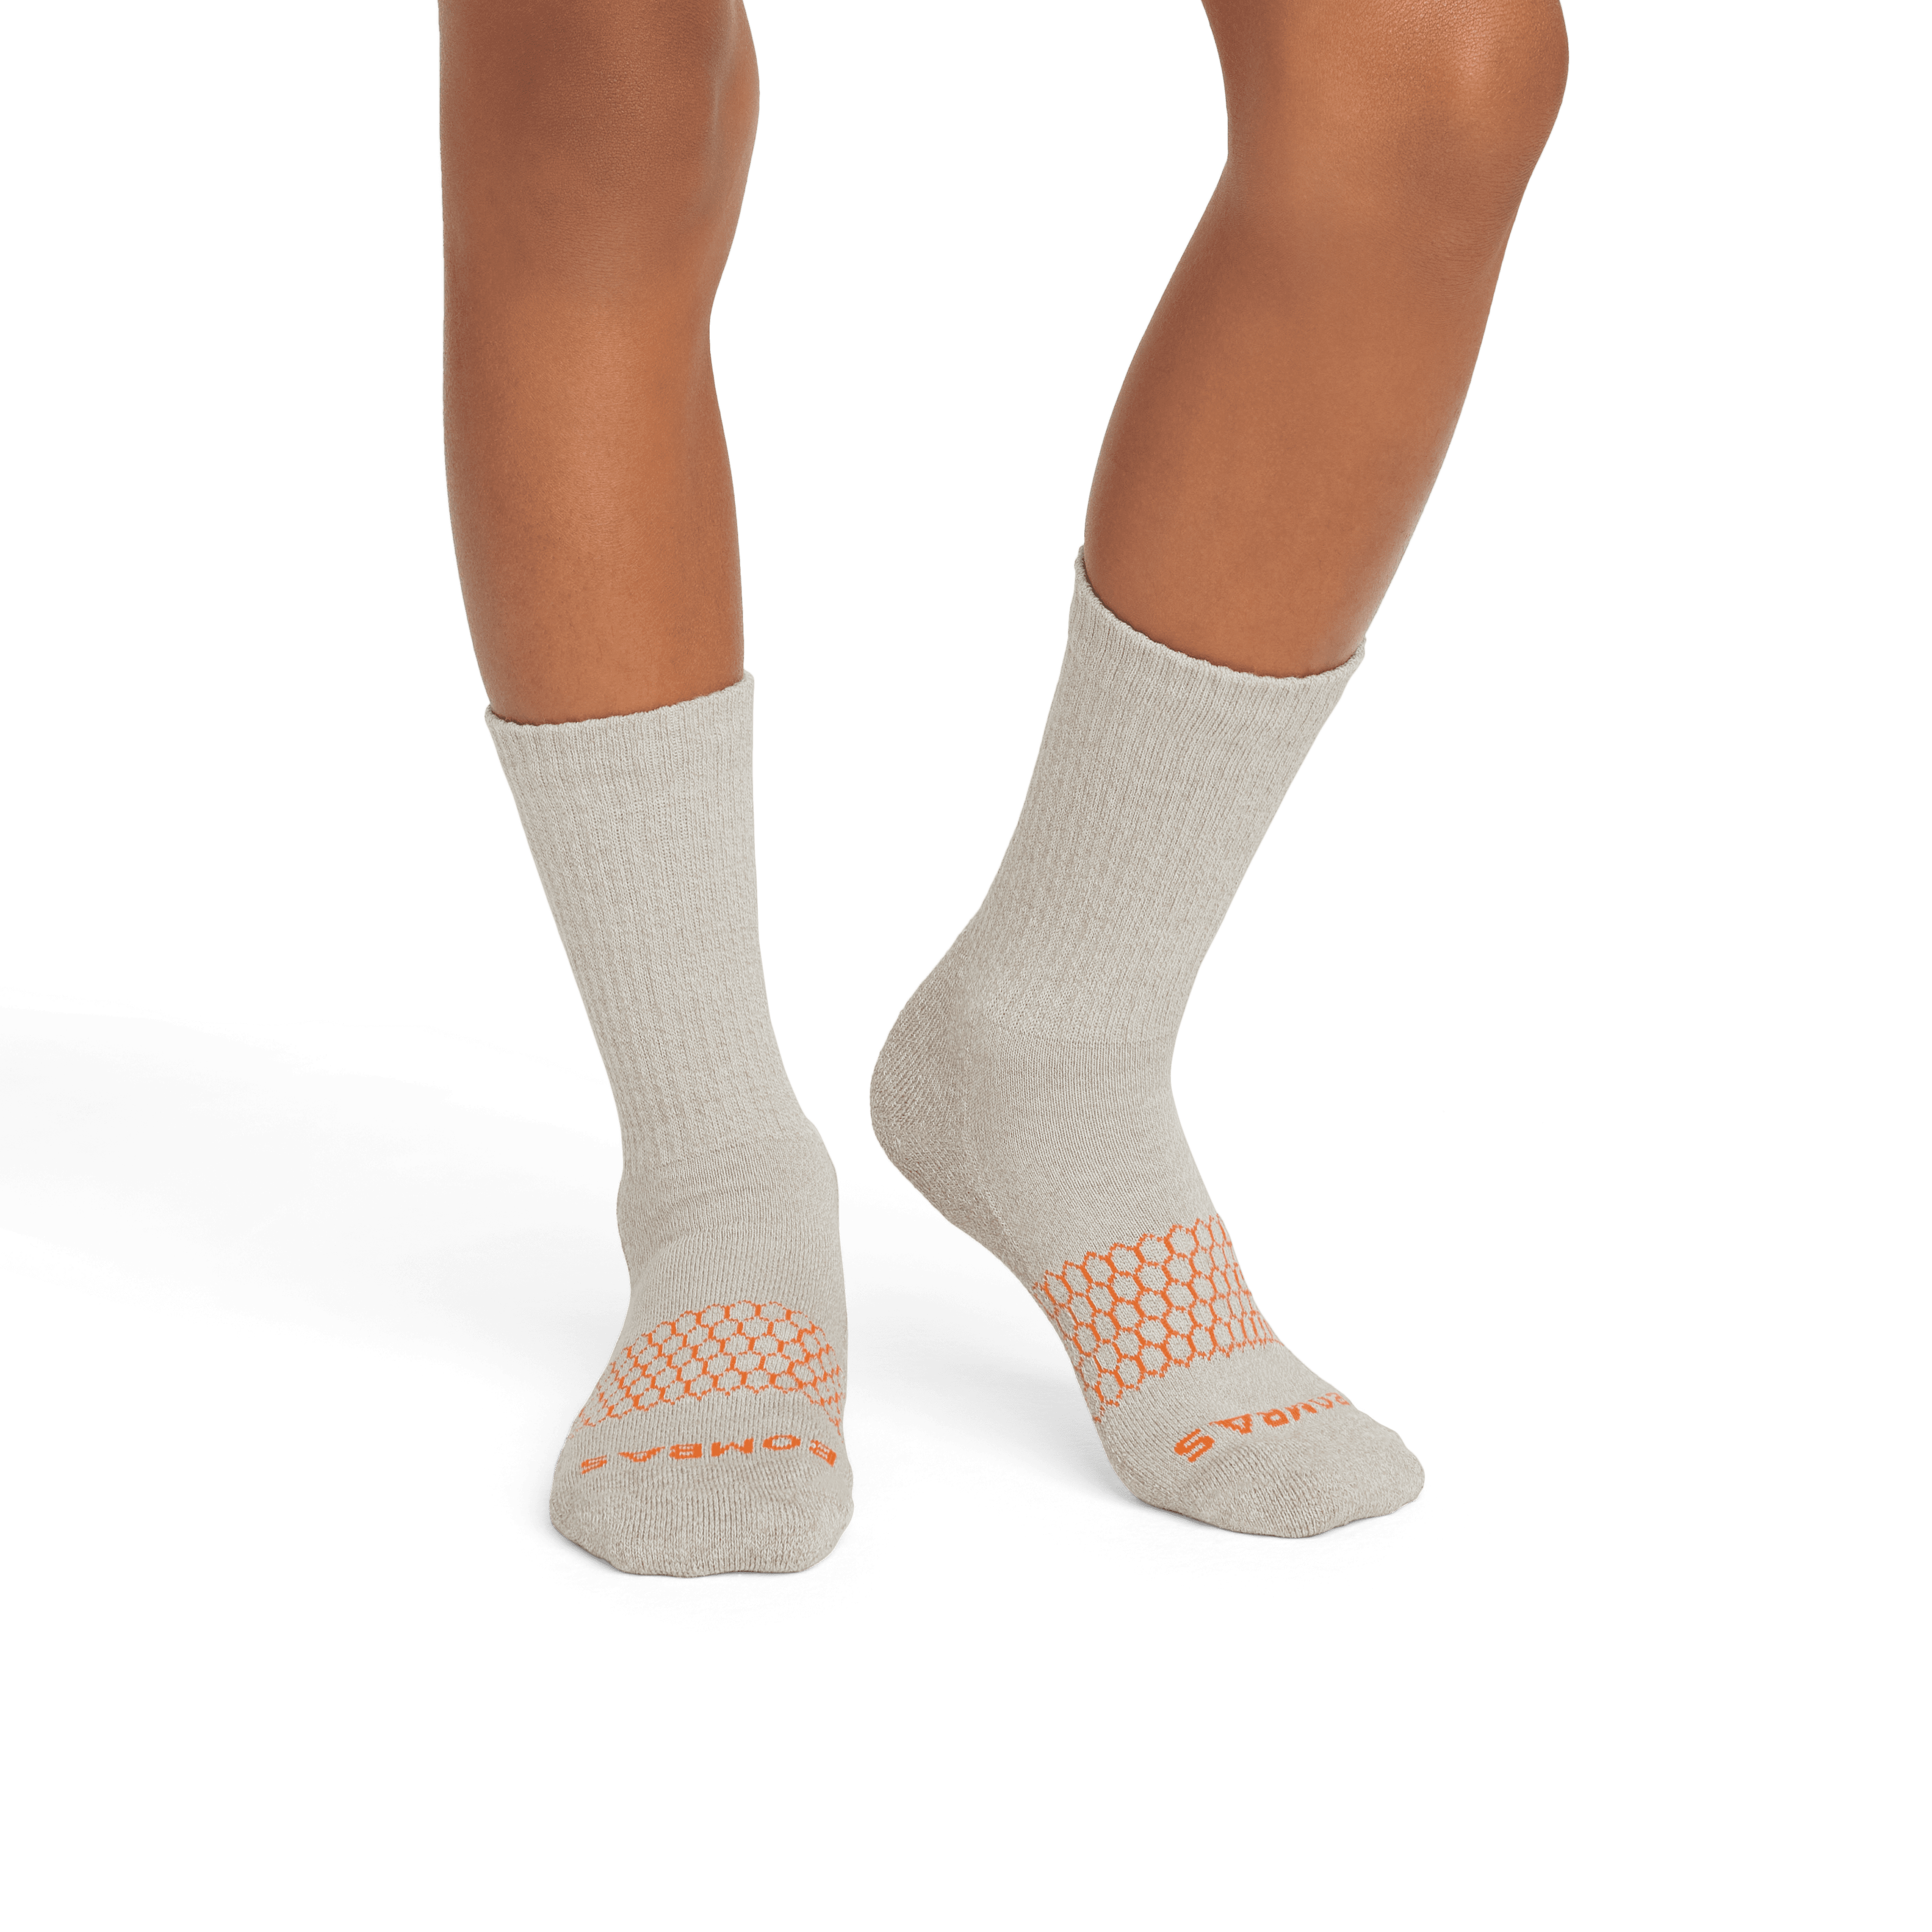 Bombas Toddler Gripper Calf Sock 8-Pack on Marmalade